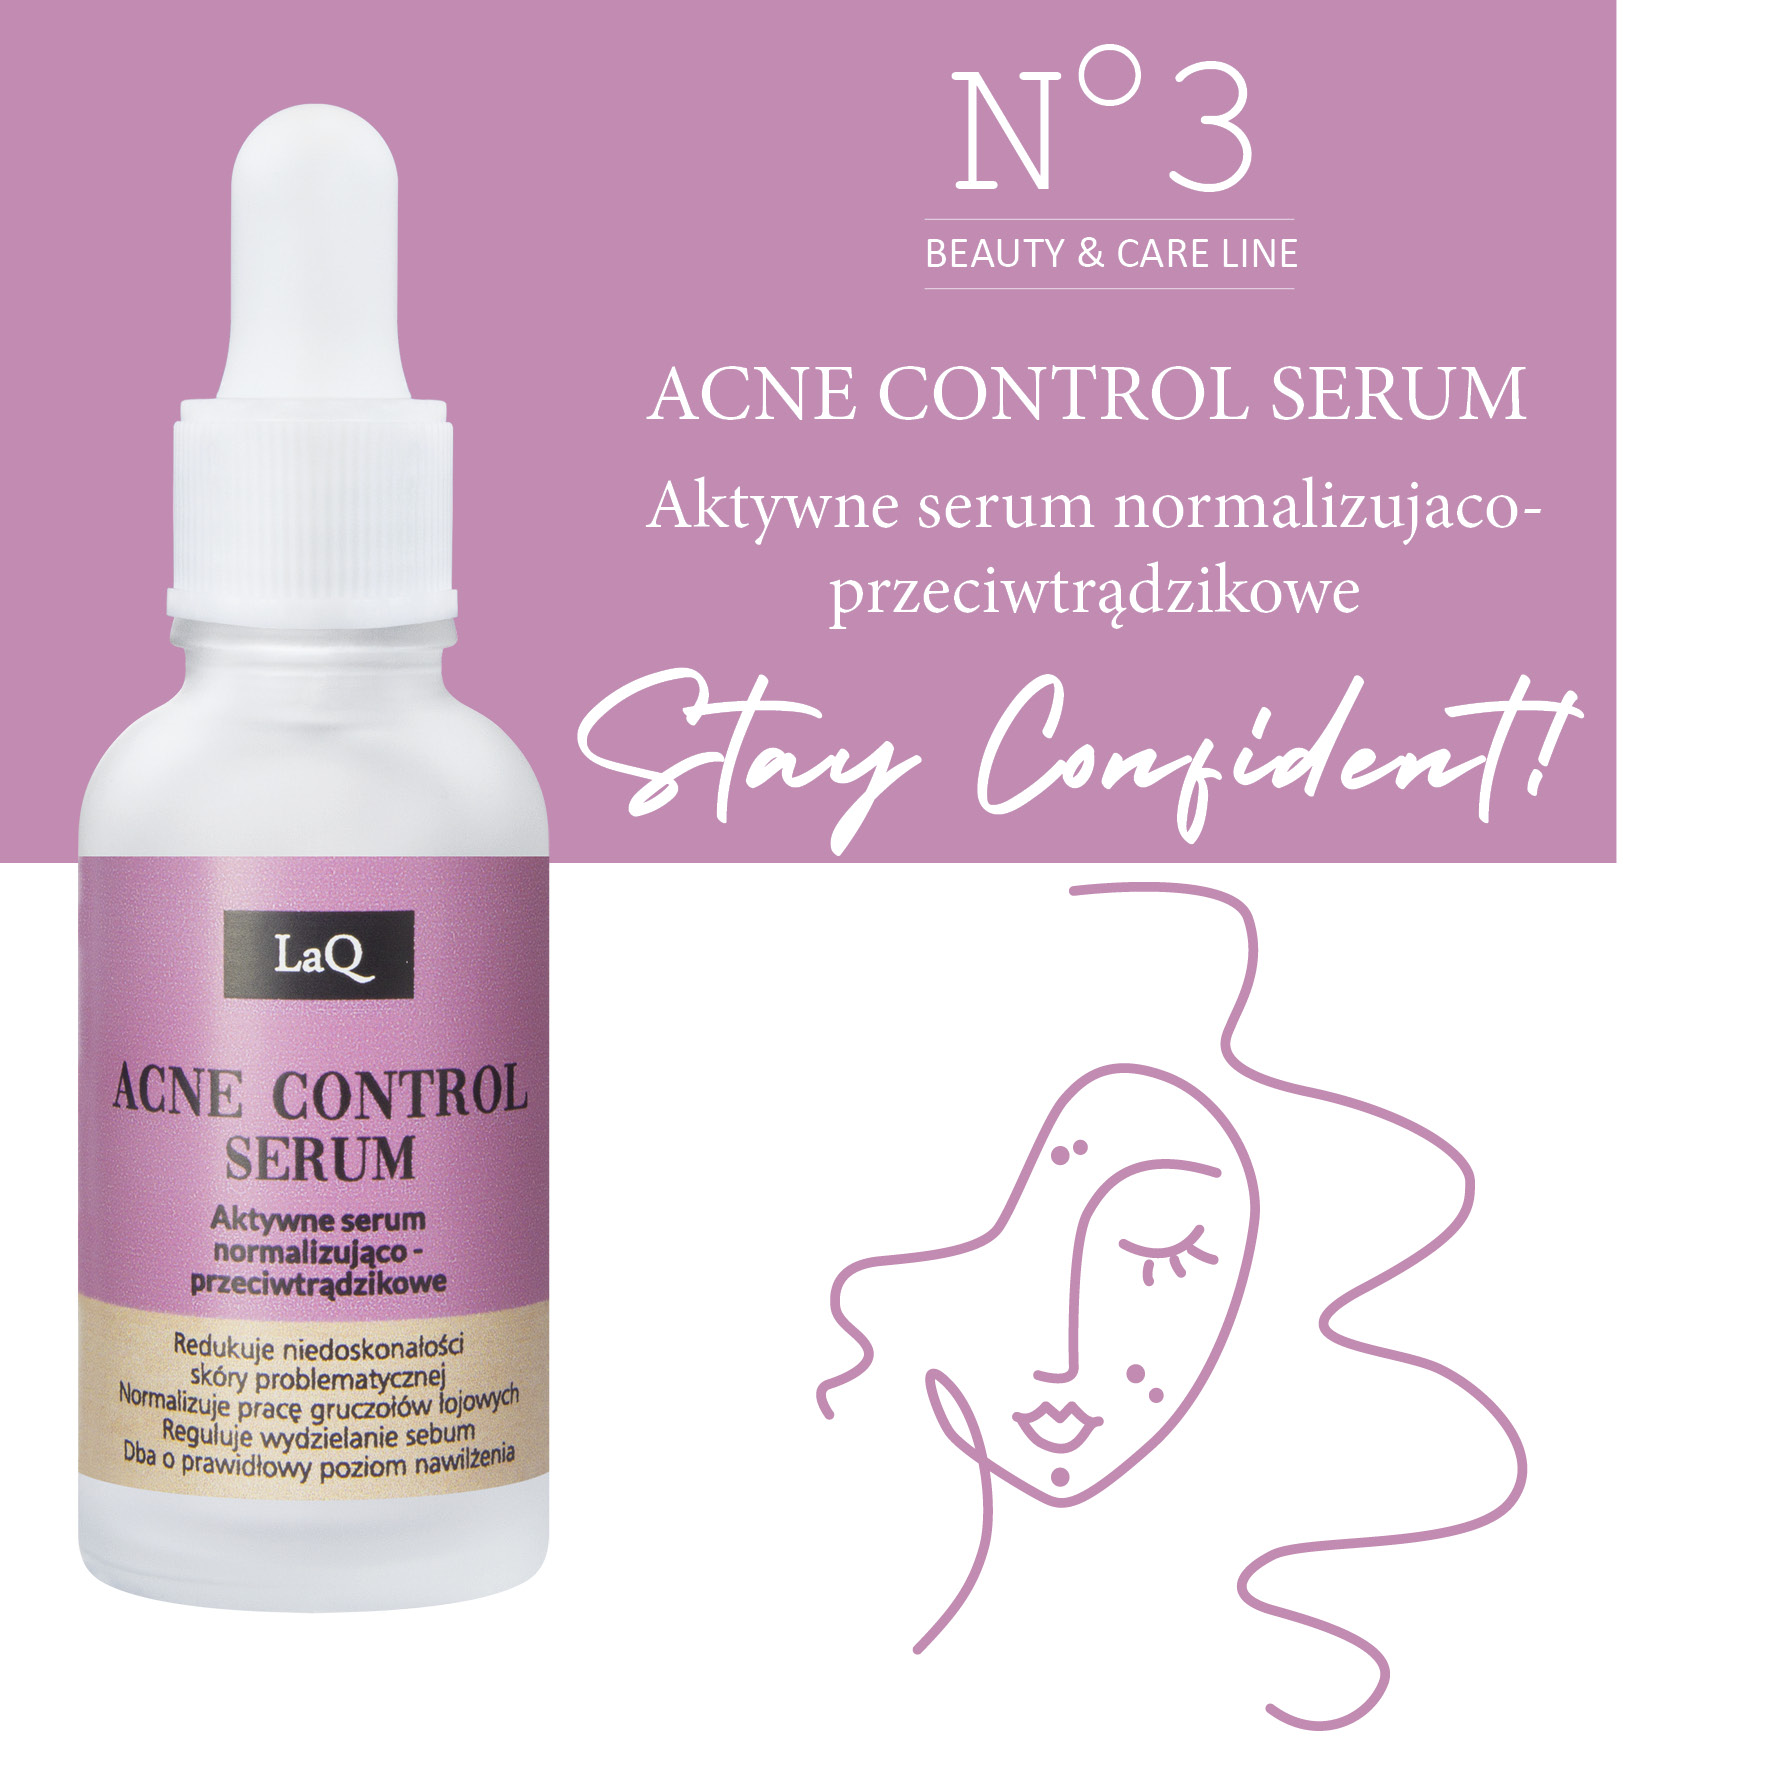 ACNE CONTROL SERUM – NO3 Stay Confident!